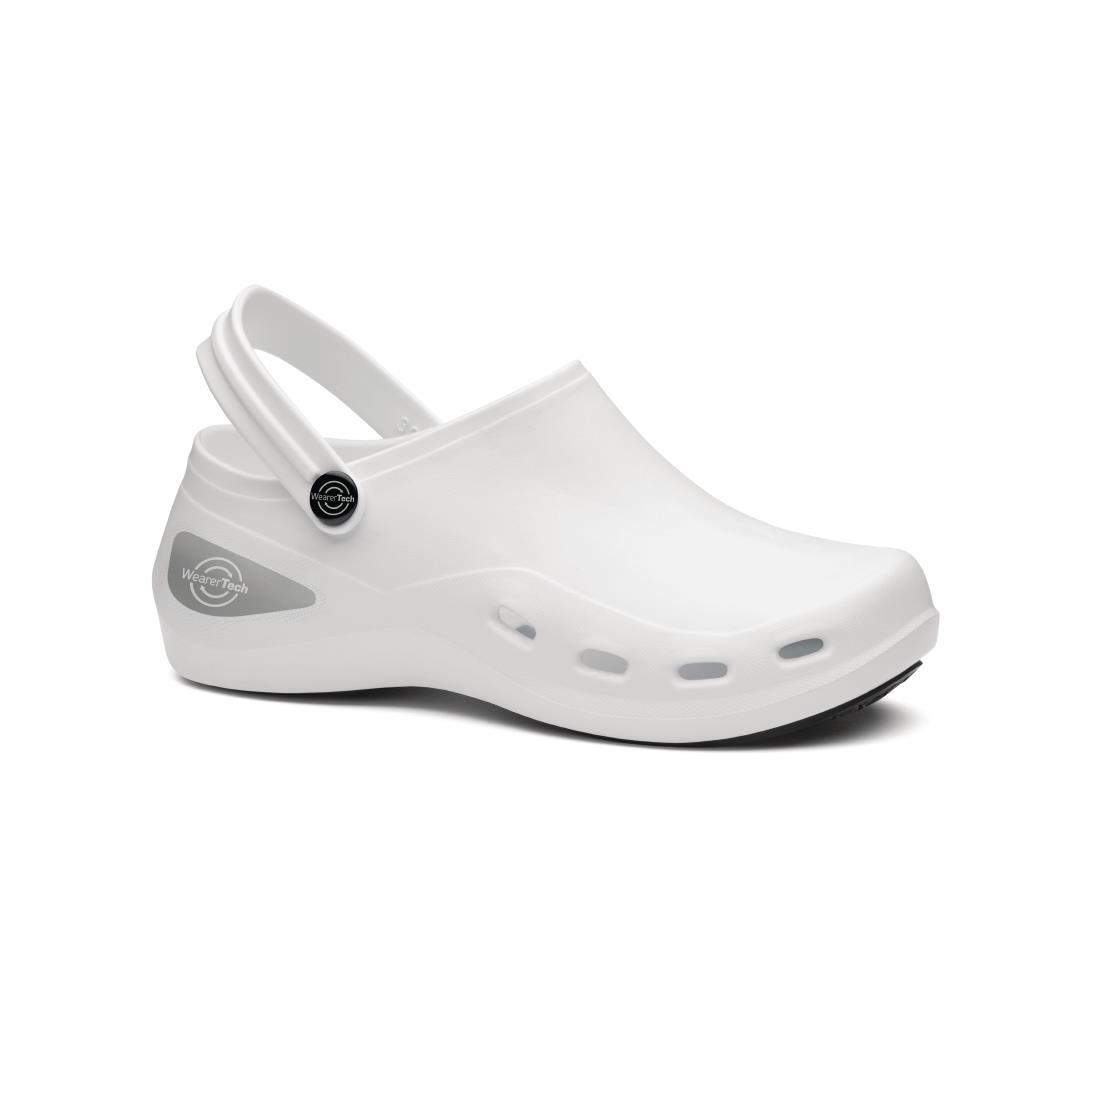 WearerTech Unisex Invigorate White Safety Shoe Size 5 - BB199-38  - 2